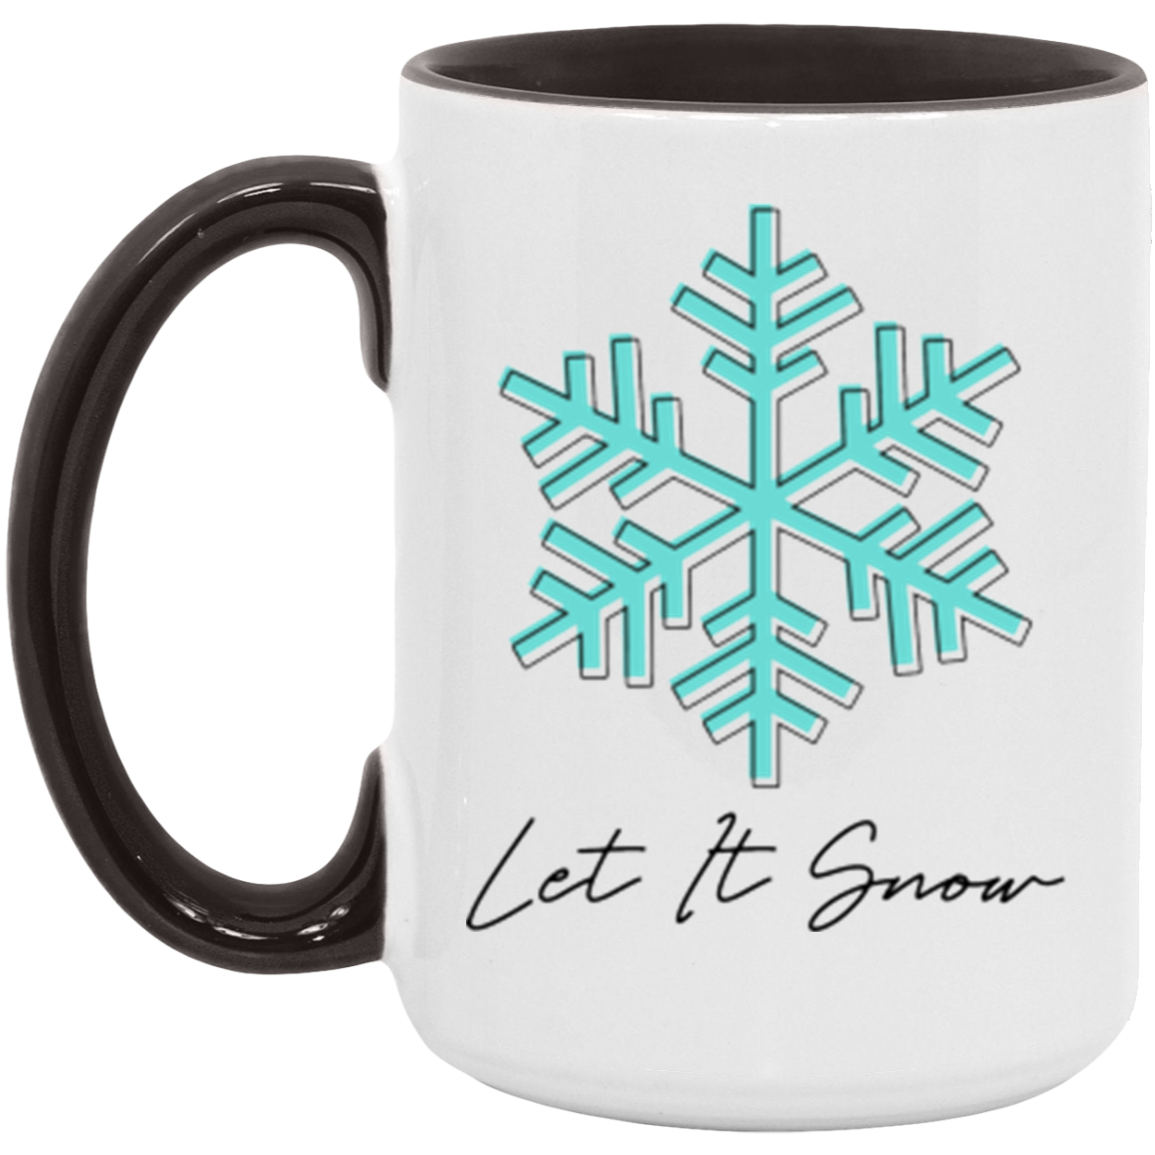 Let It Snow Mug (Blue)